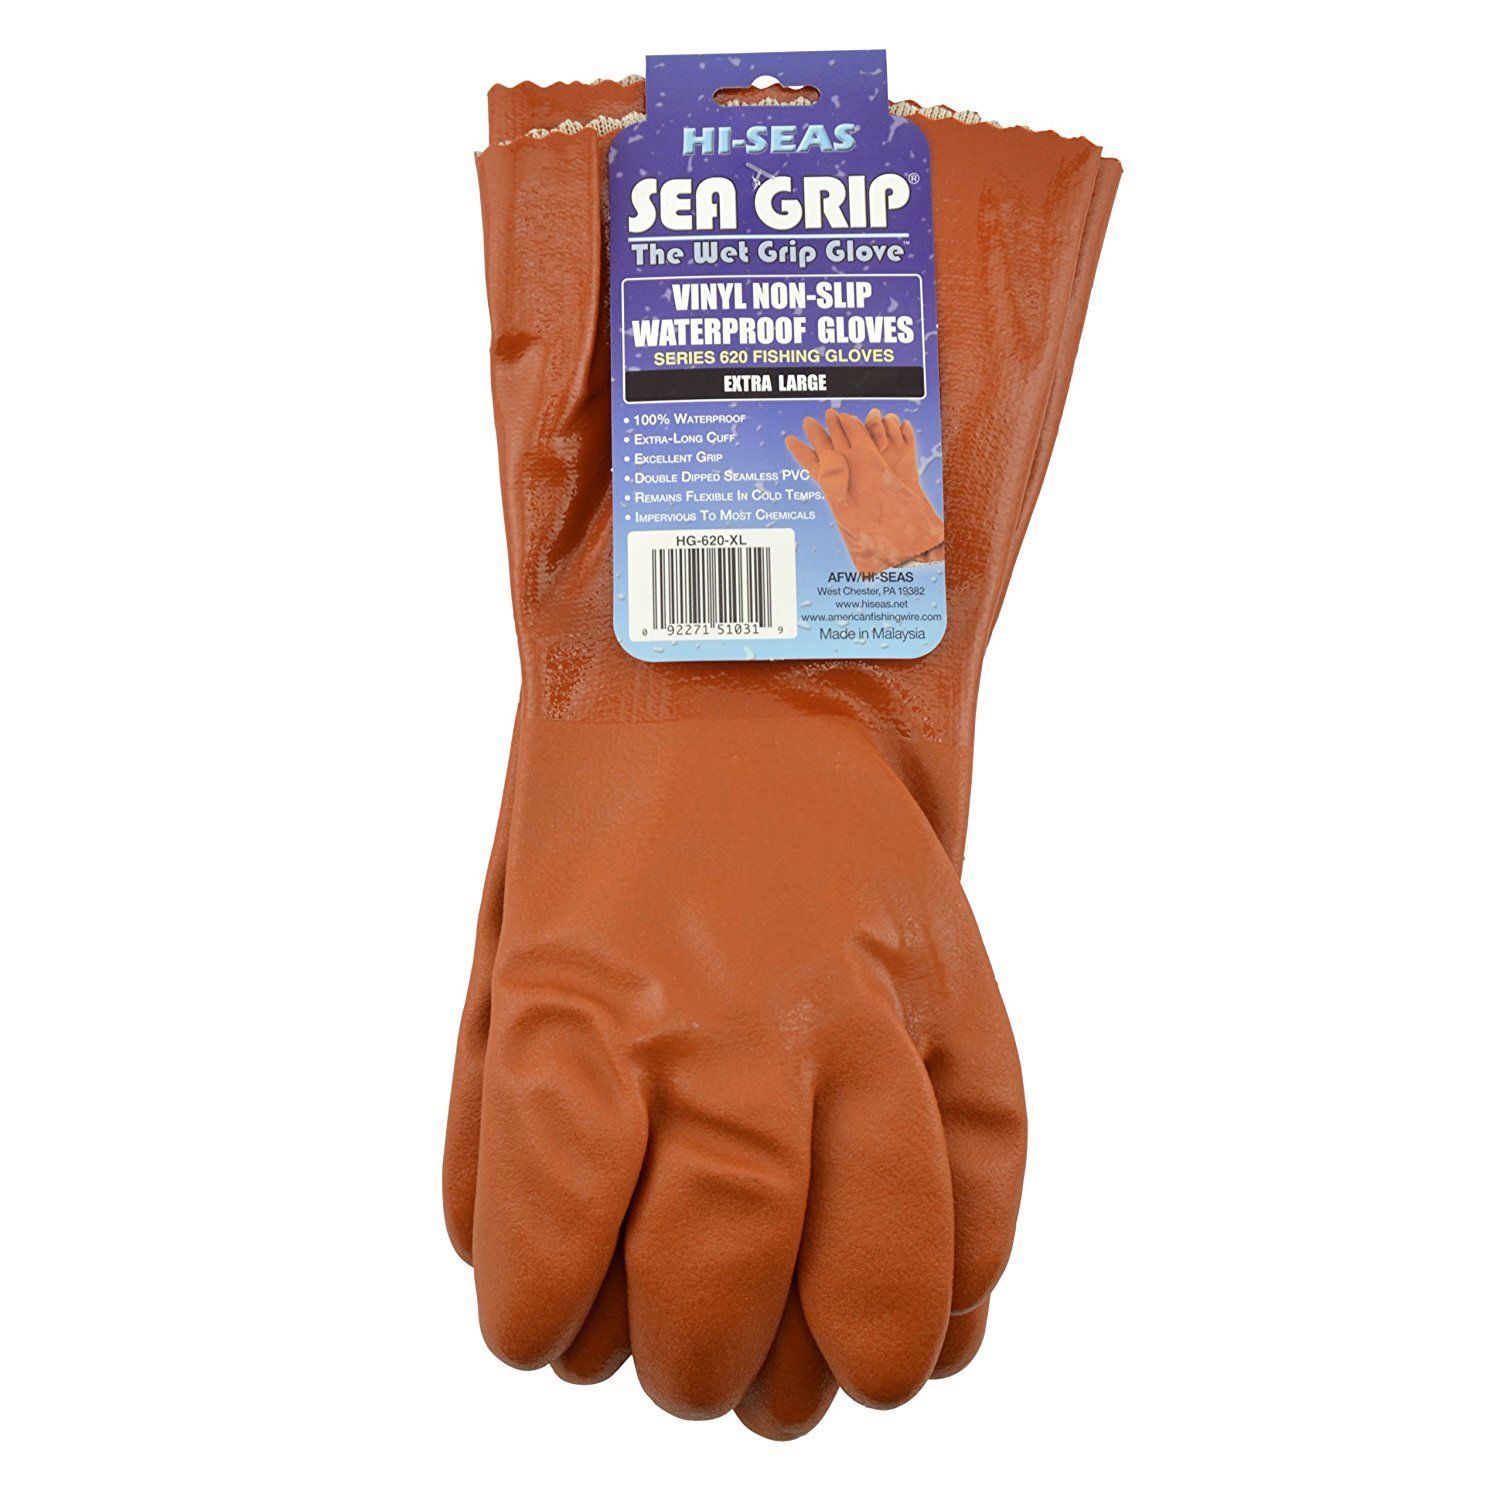 Hi-Seas Sea Grip Vinyl Waterproof Fishing Glove, Large Size, Orange HG-66-LG